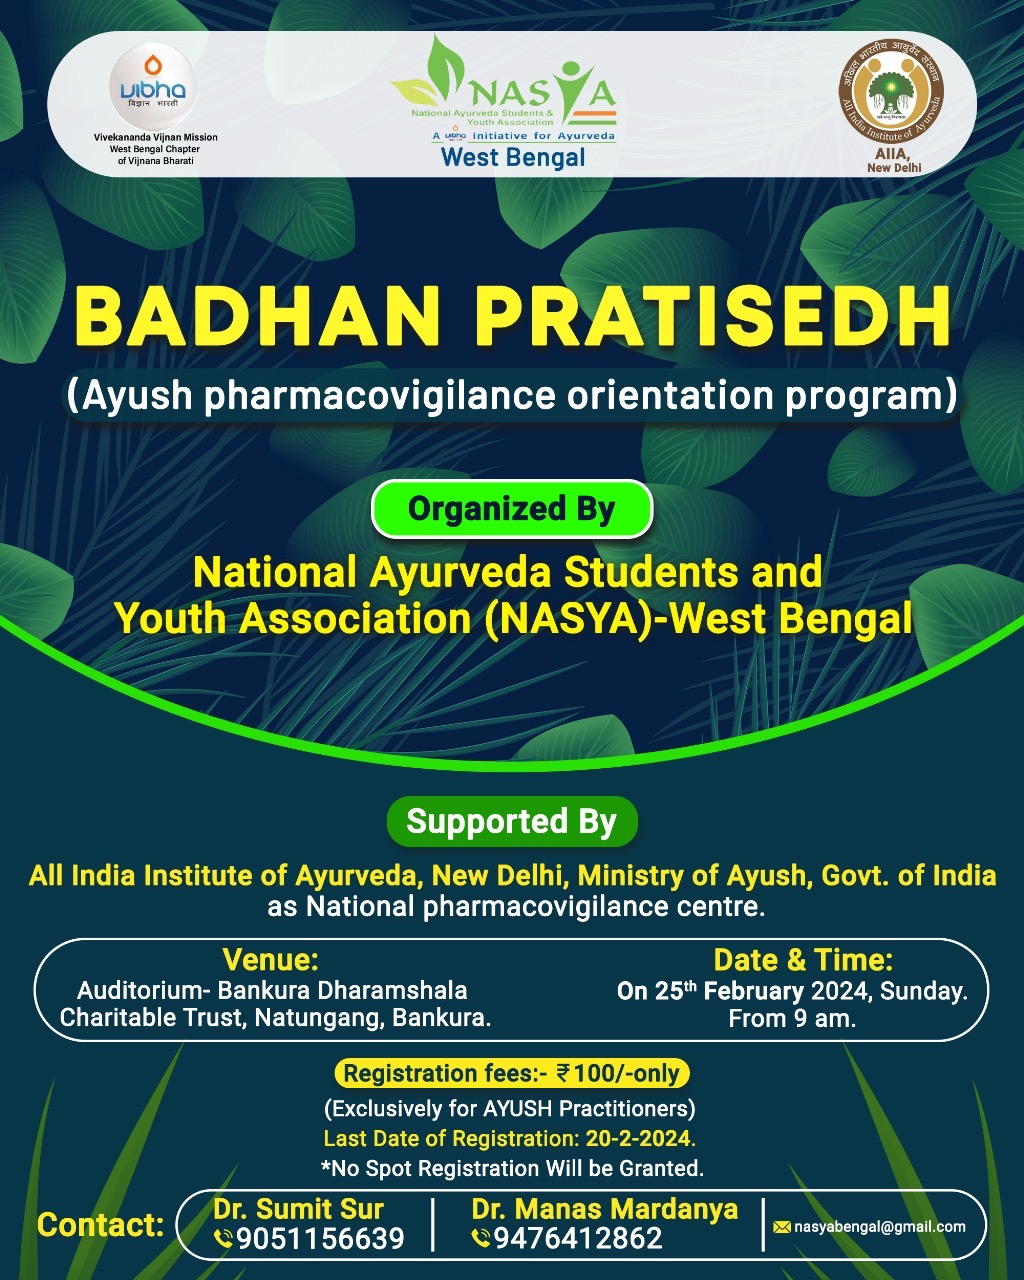 Event - BADHAN PRATISEDH (Ayush pharmacovigilance orientation program)